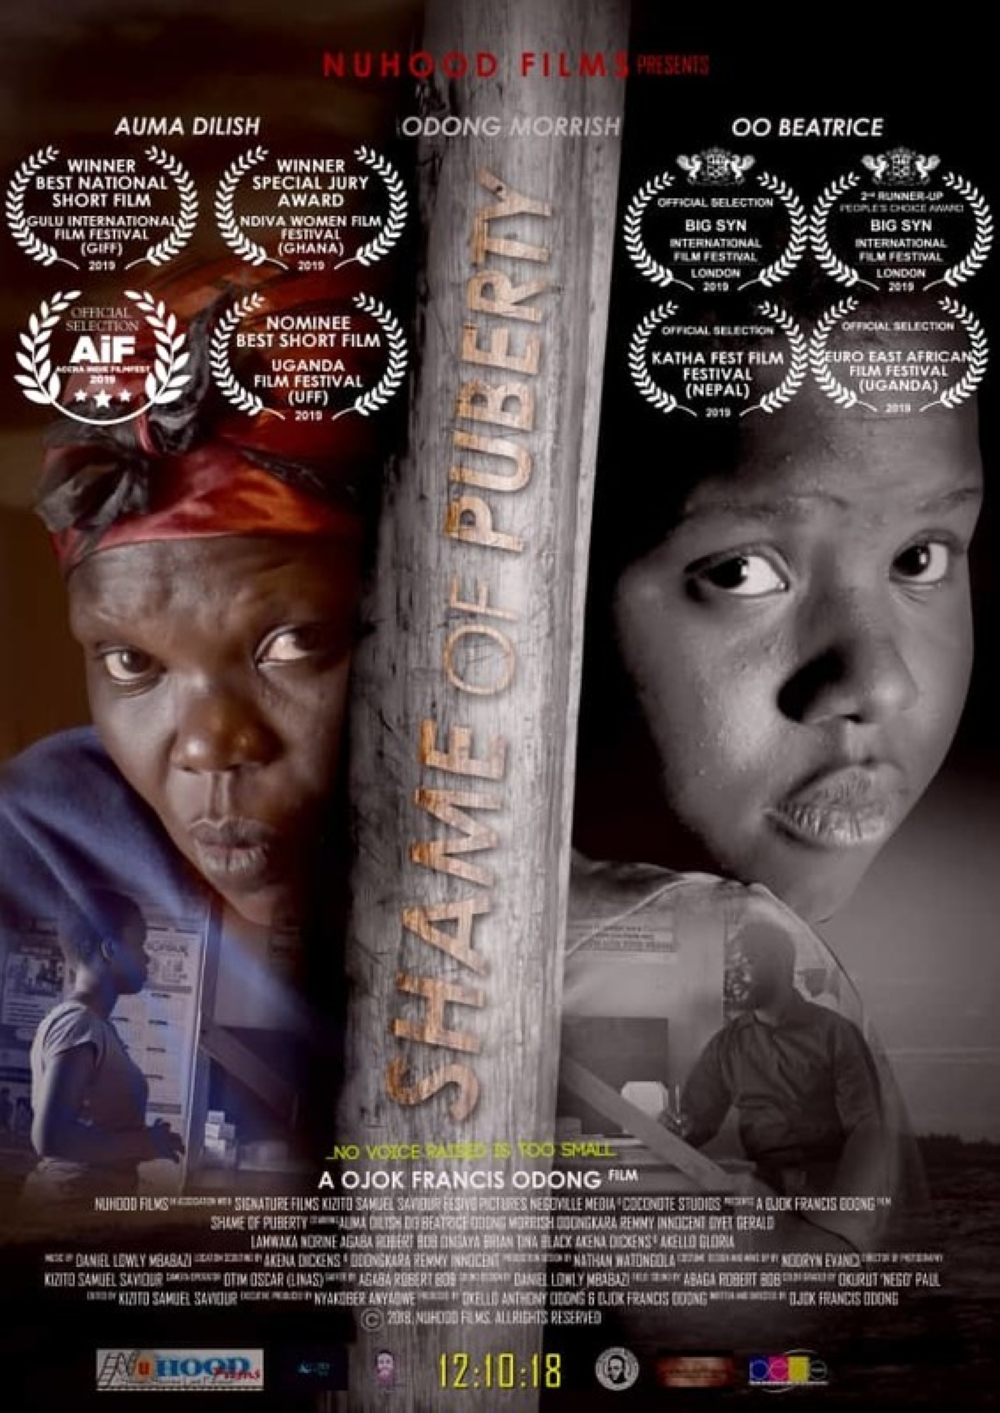 SHAME OF PUBERTY is among films to be presented at URUSARO International Women Film Festival in Kigali Rwanda.